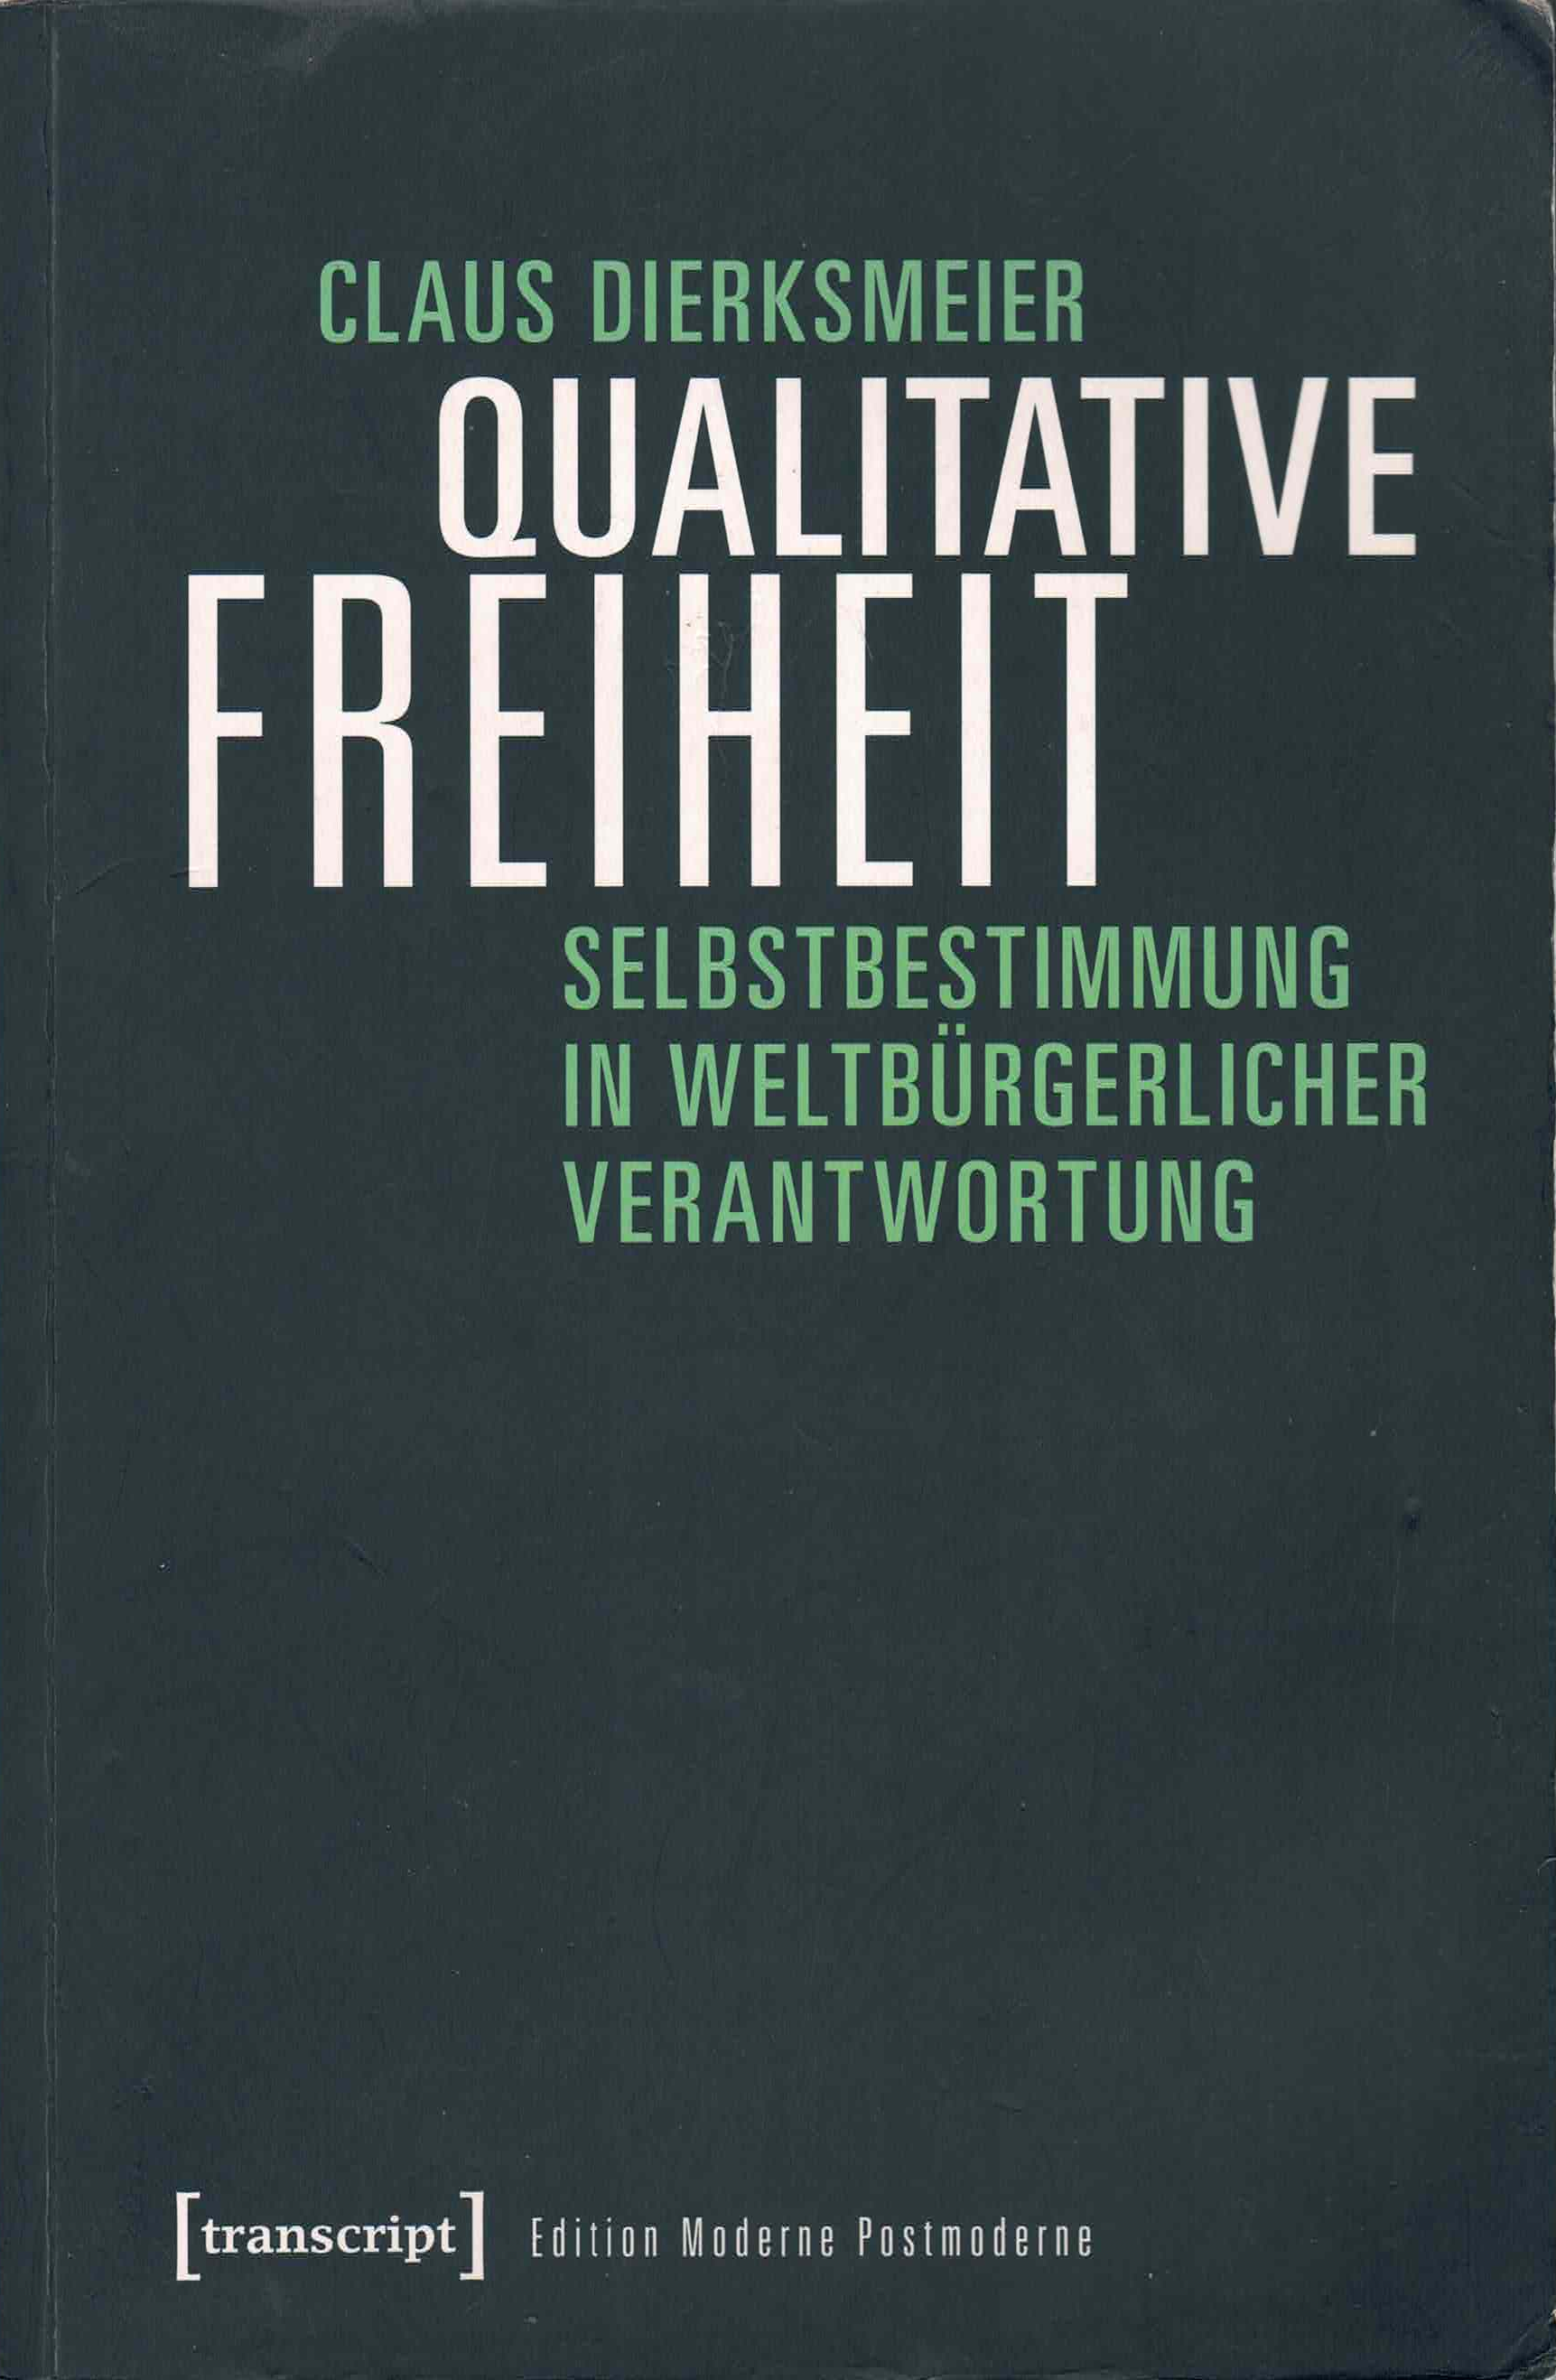 Claus Dierksmeier: Qualitative Freiheit (Paperback, German language, 2016, Transcript Verlag)